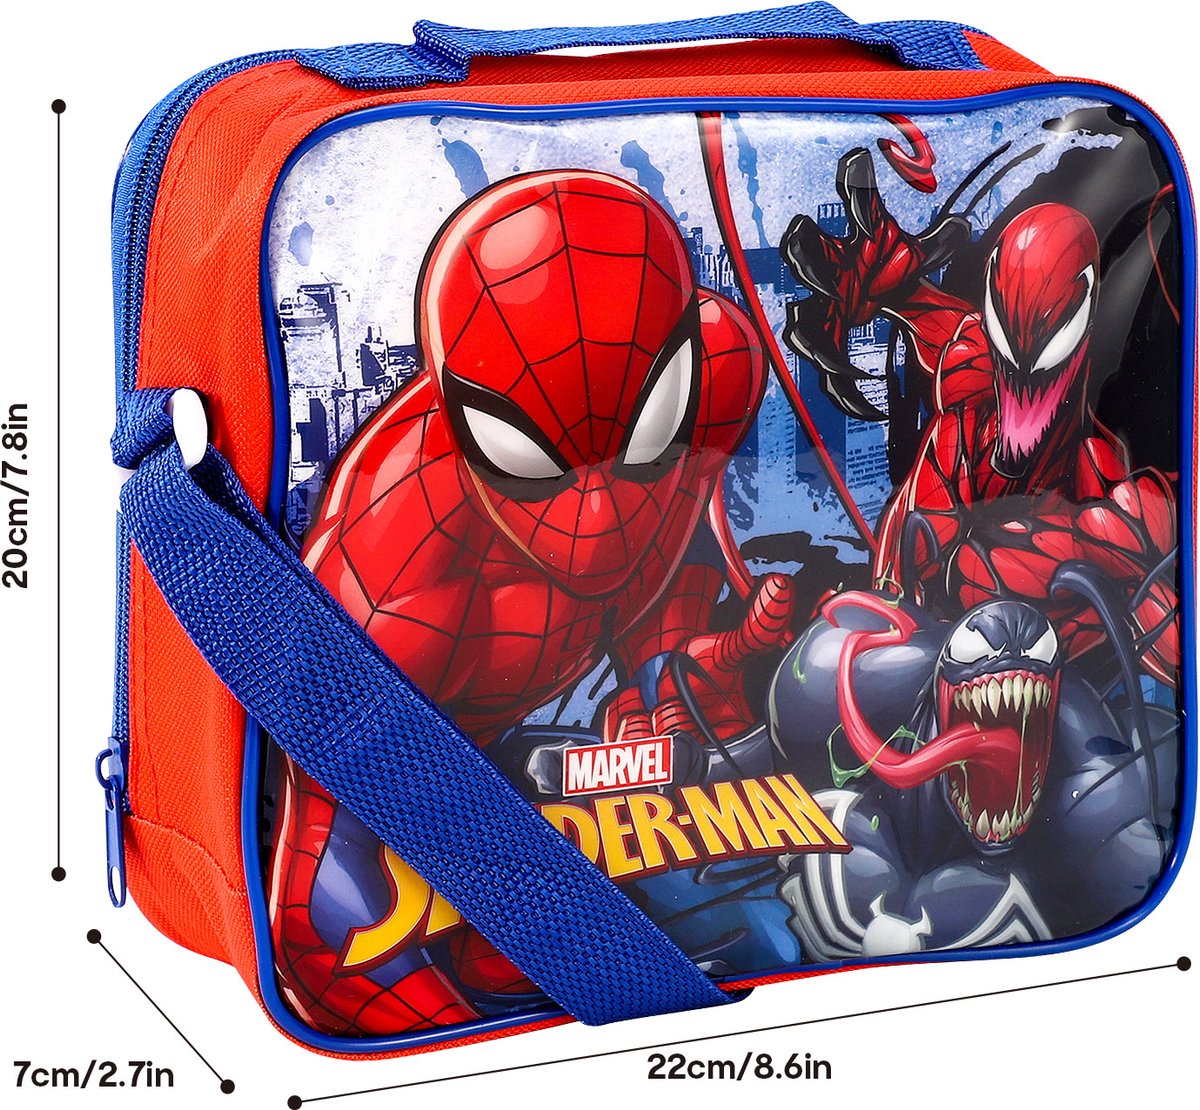 SPIDER-MAN Lunch bag avec boîte à lunch et tasse Spiderman